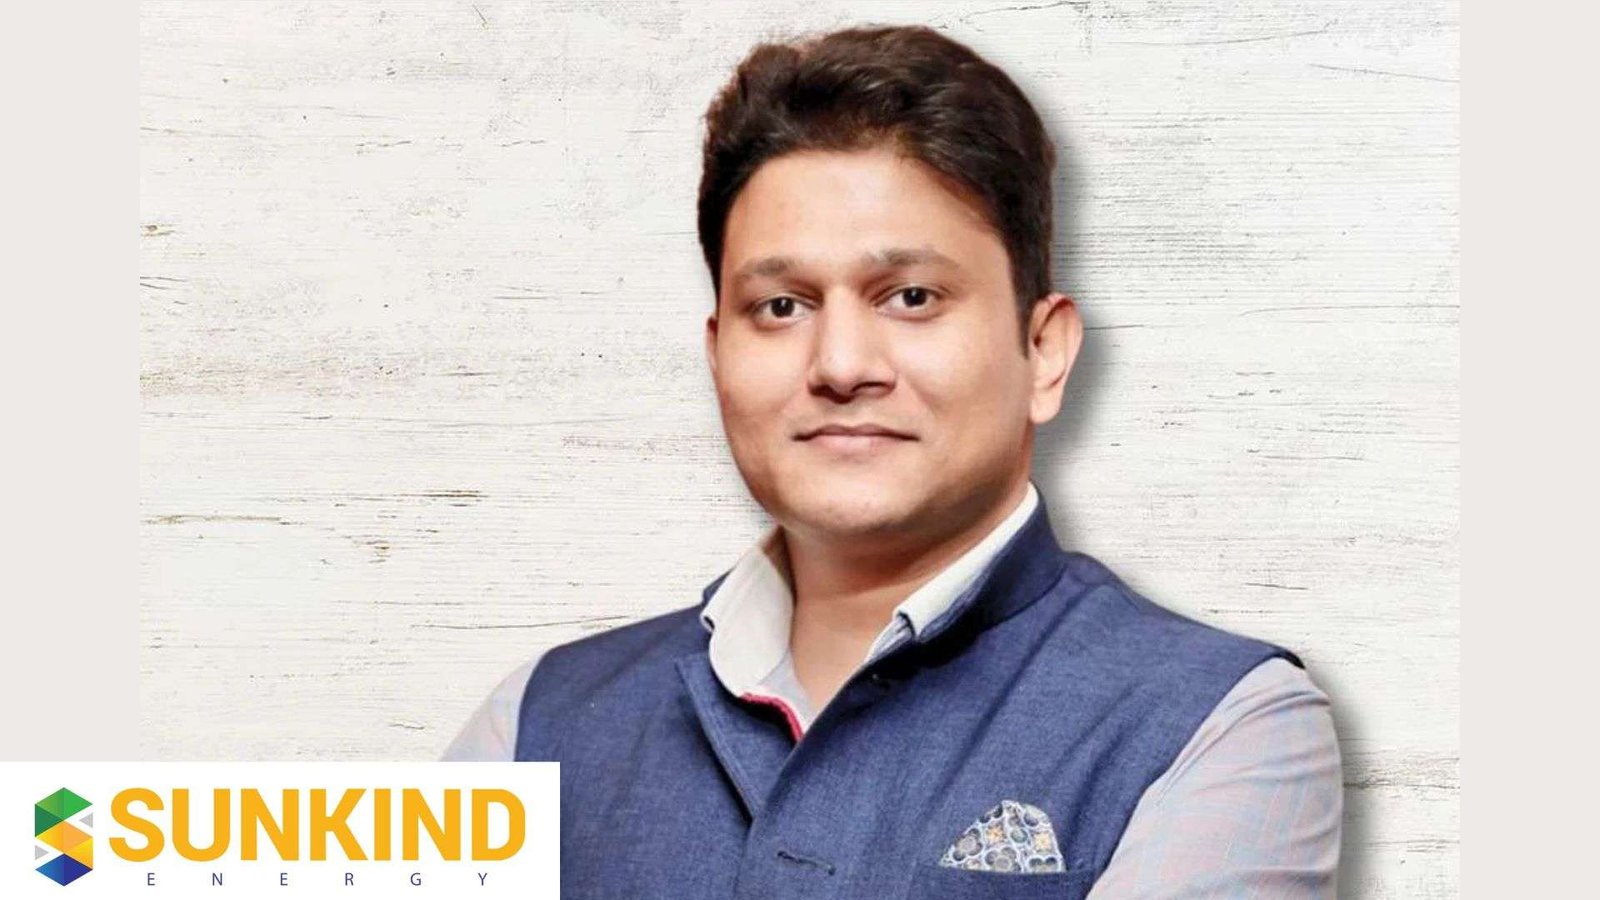 Sunkind Energy's CEO Hanish Gupta